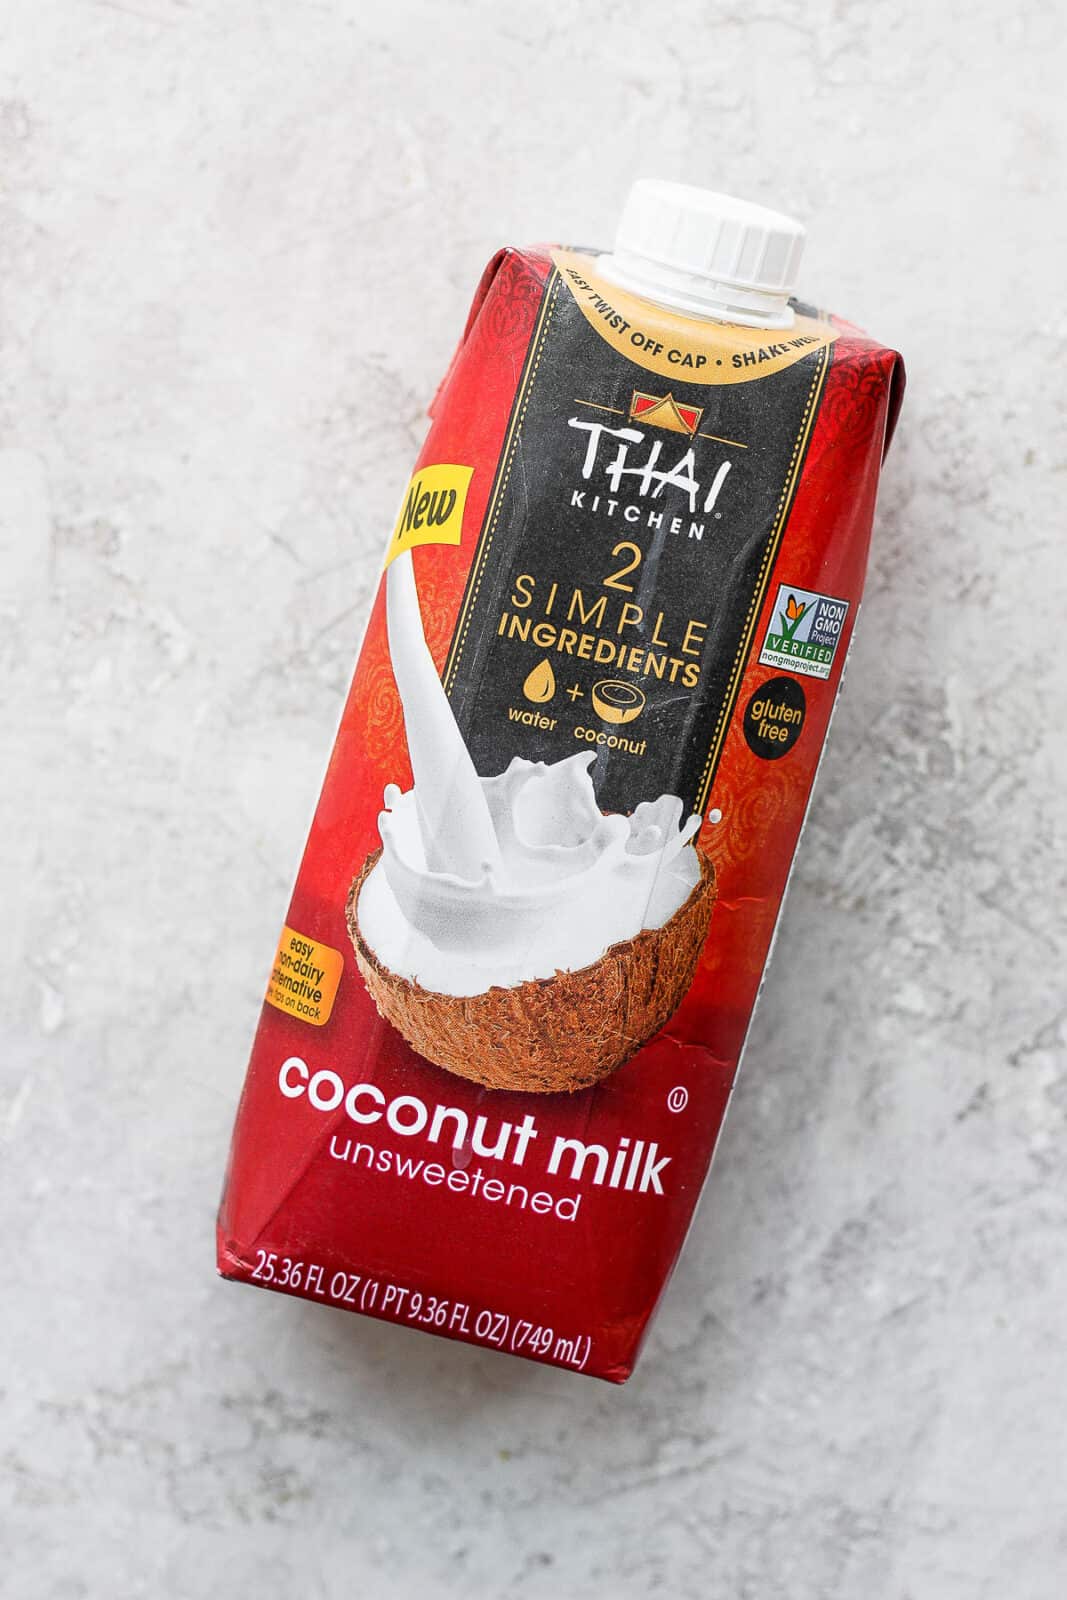 A carton of Thai Kitchen coconut milk.